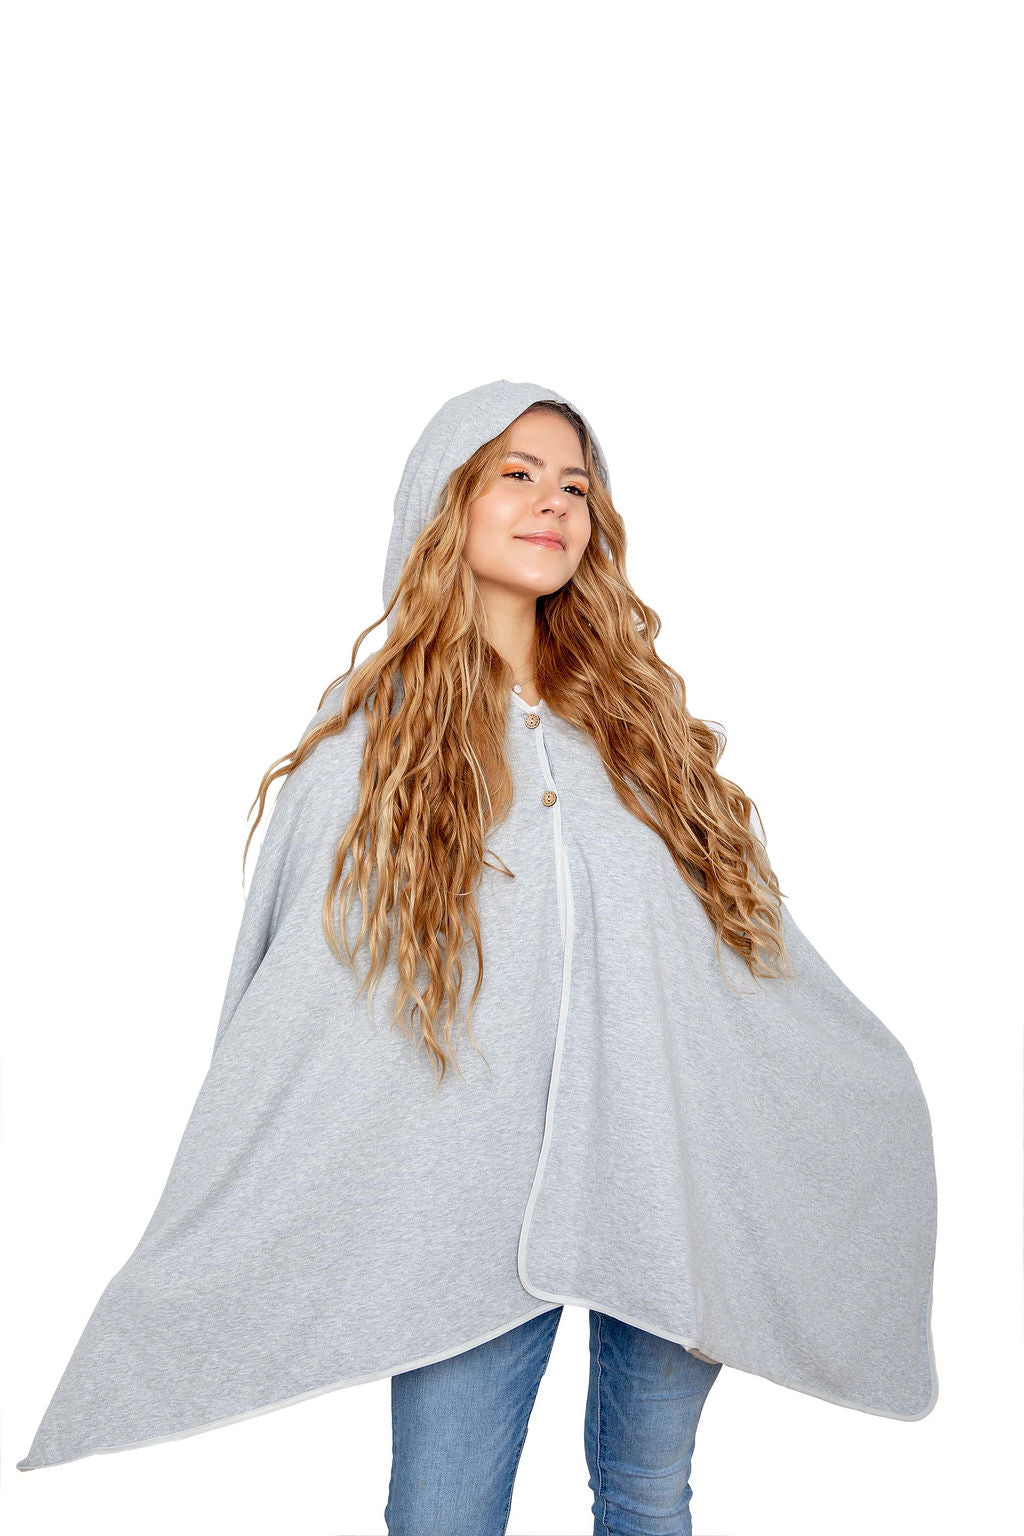 Faraday Fabric EMF Radiation Protection Belly Blanket Pregnancy EMF  Protectiv